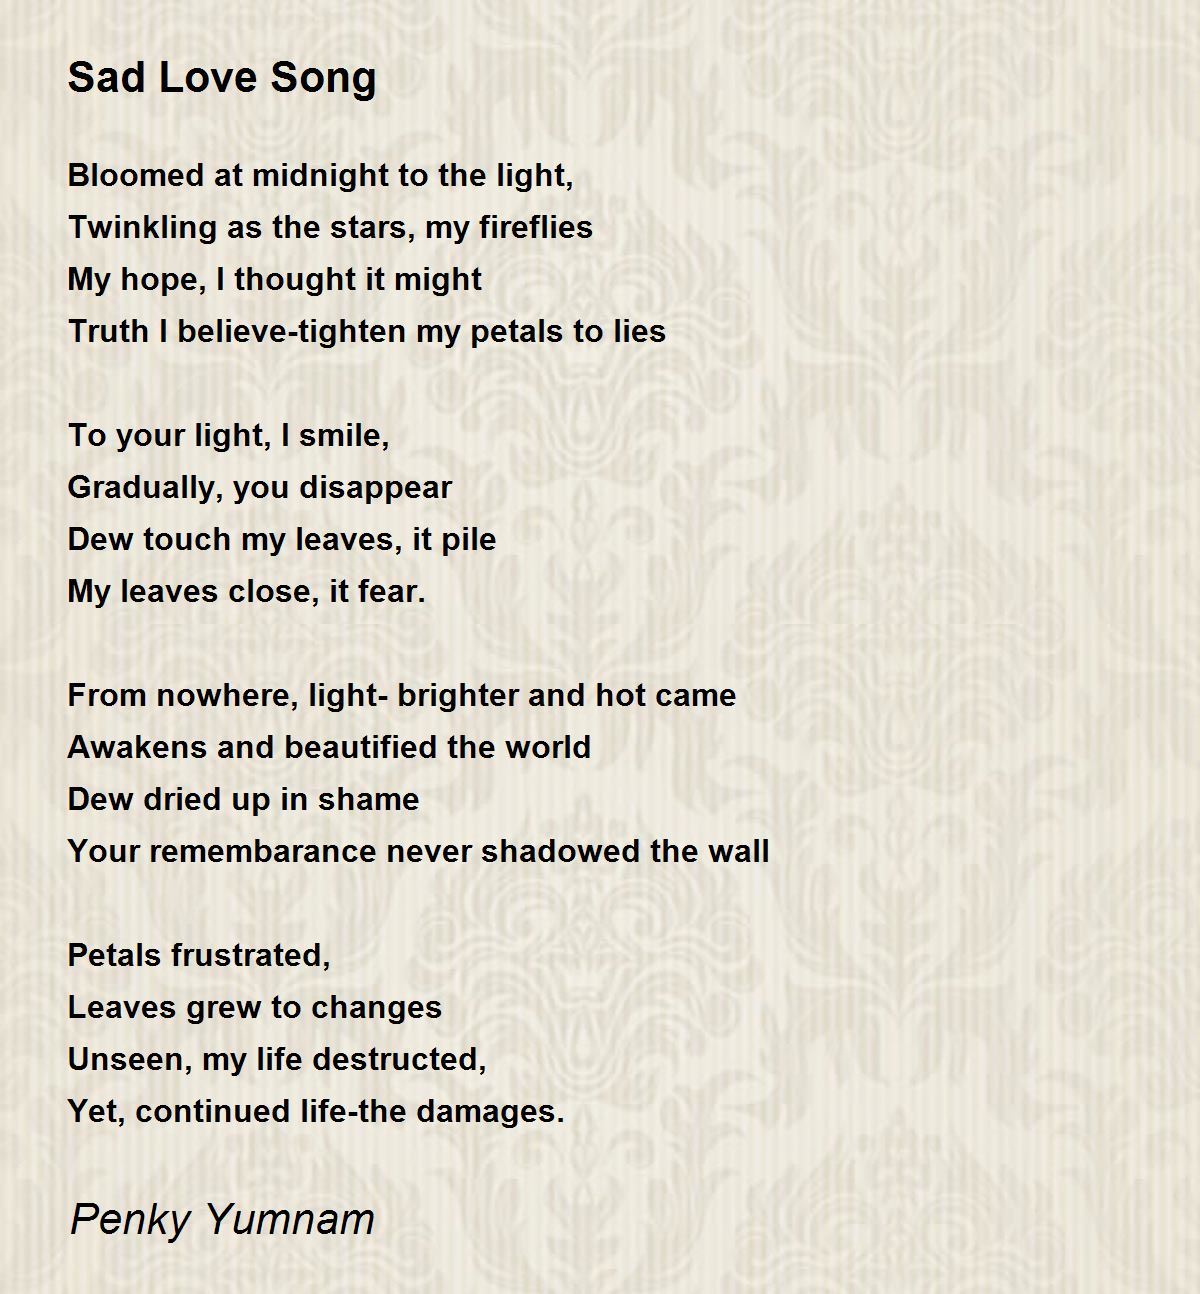 Sad Love Song - Sad Love Song Poem by Penky Yumnam